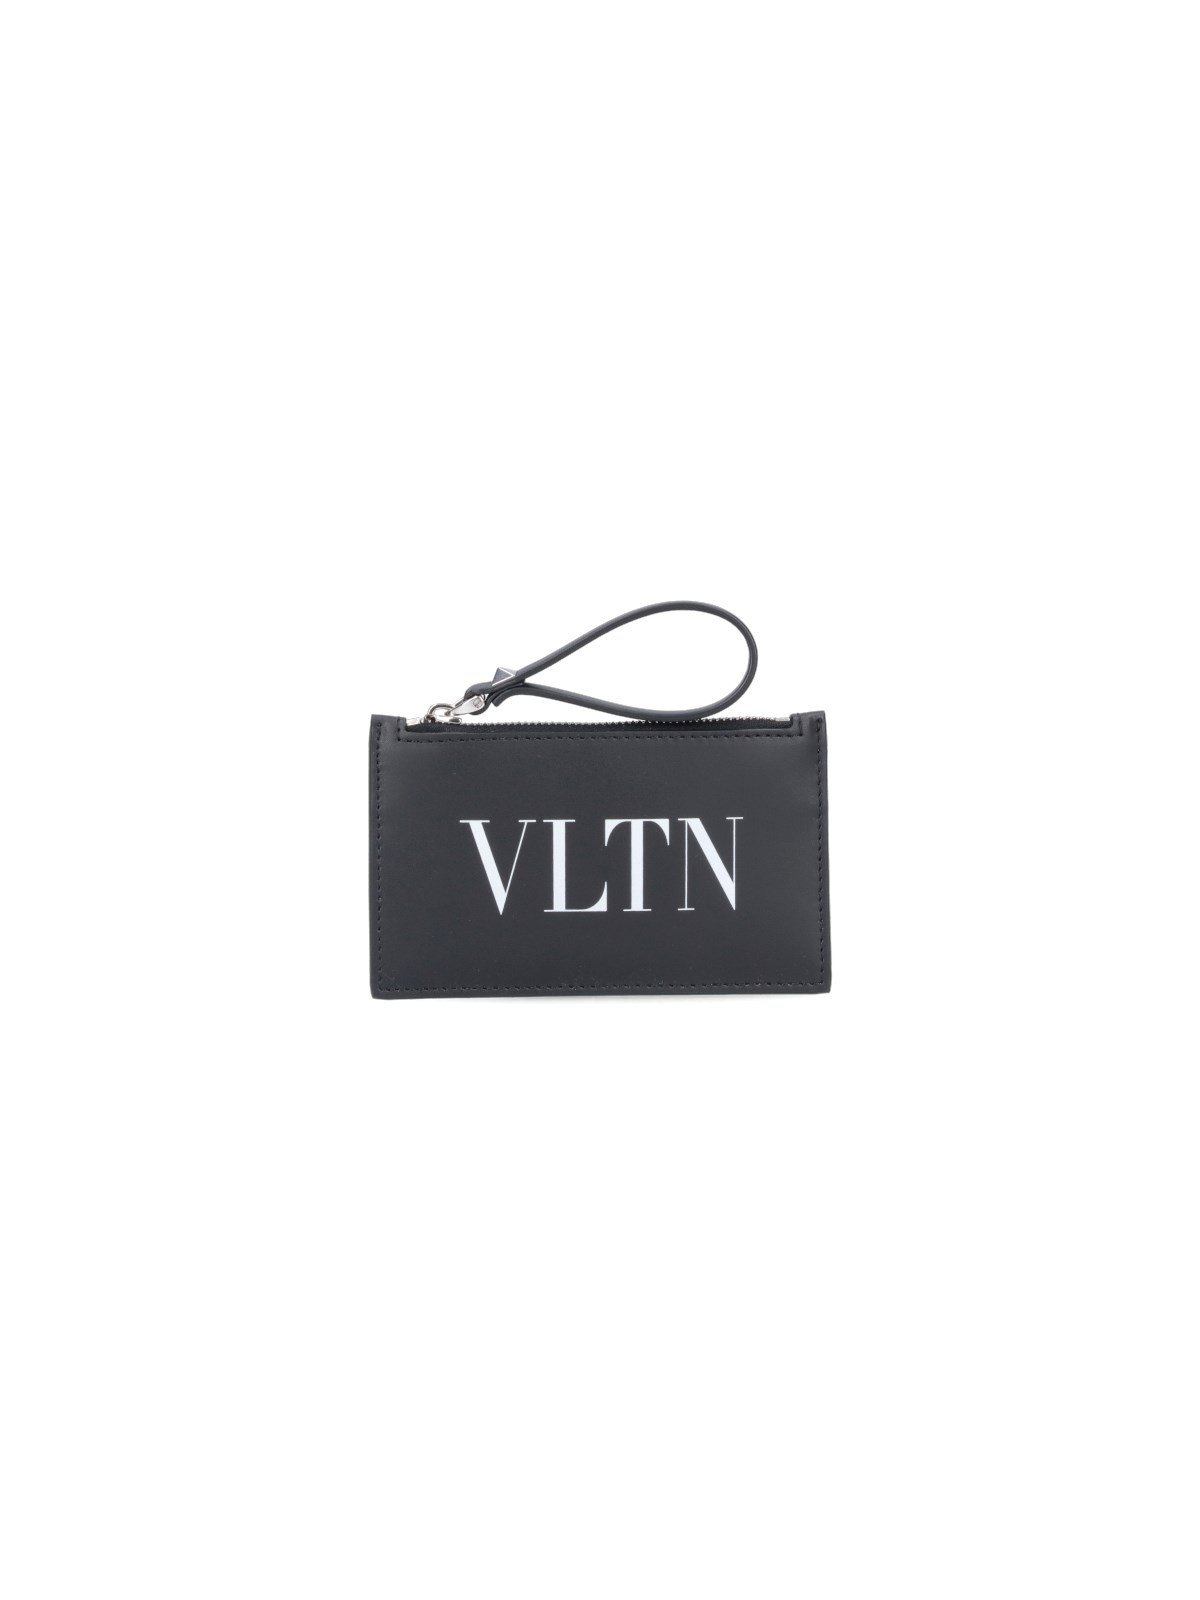 VALENTINO VLTN LOGO Clutch Bag VLTN ポーチ検討いたします